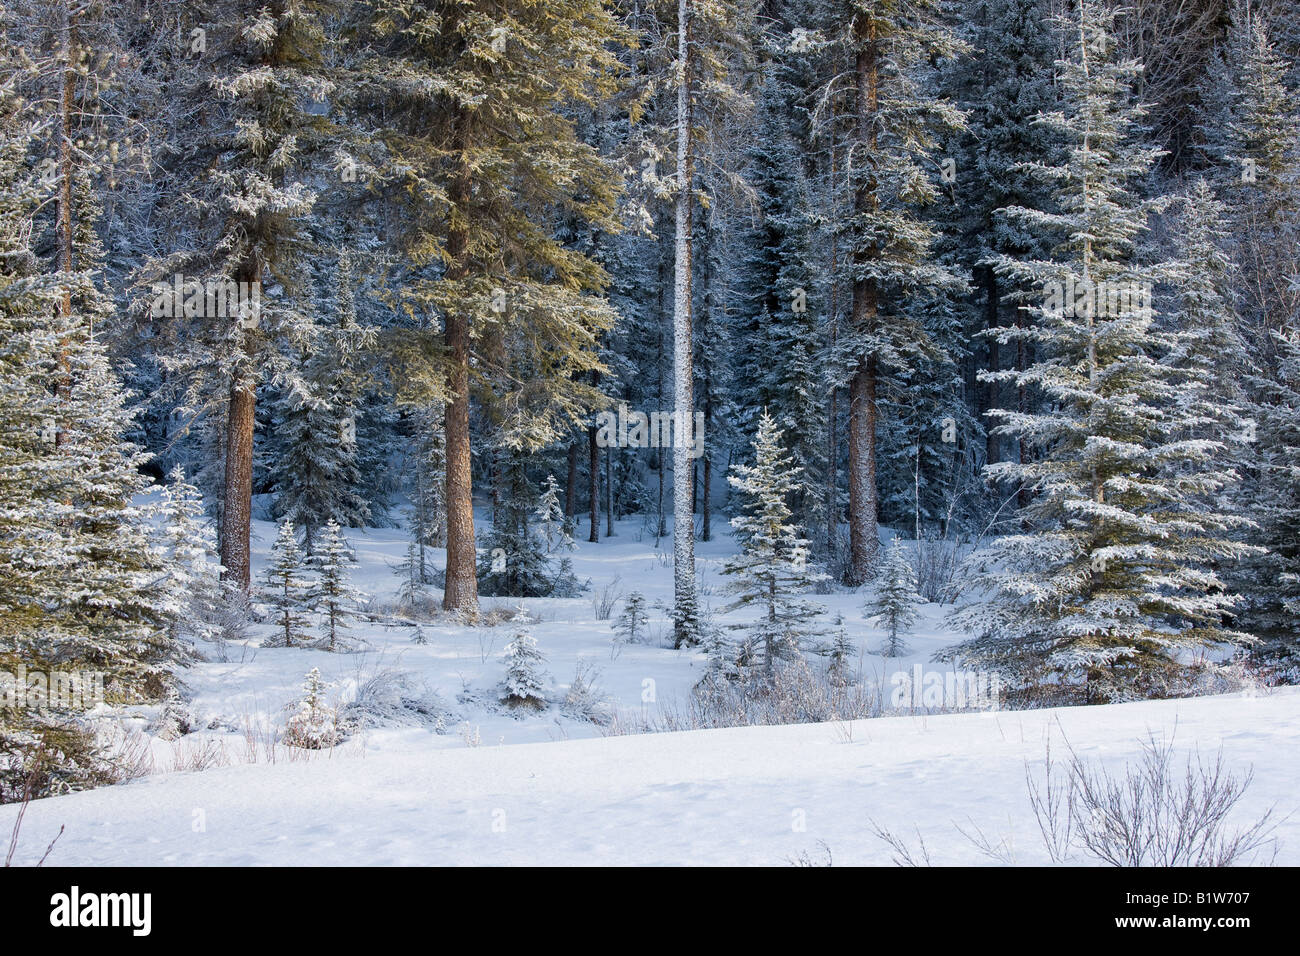 Canada Alberta Banff National Park snow covered pine trees Stock Photo